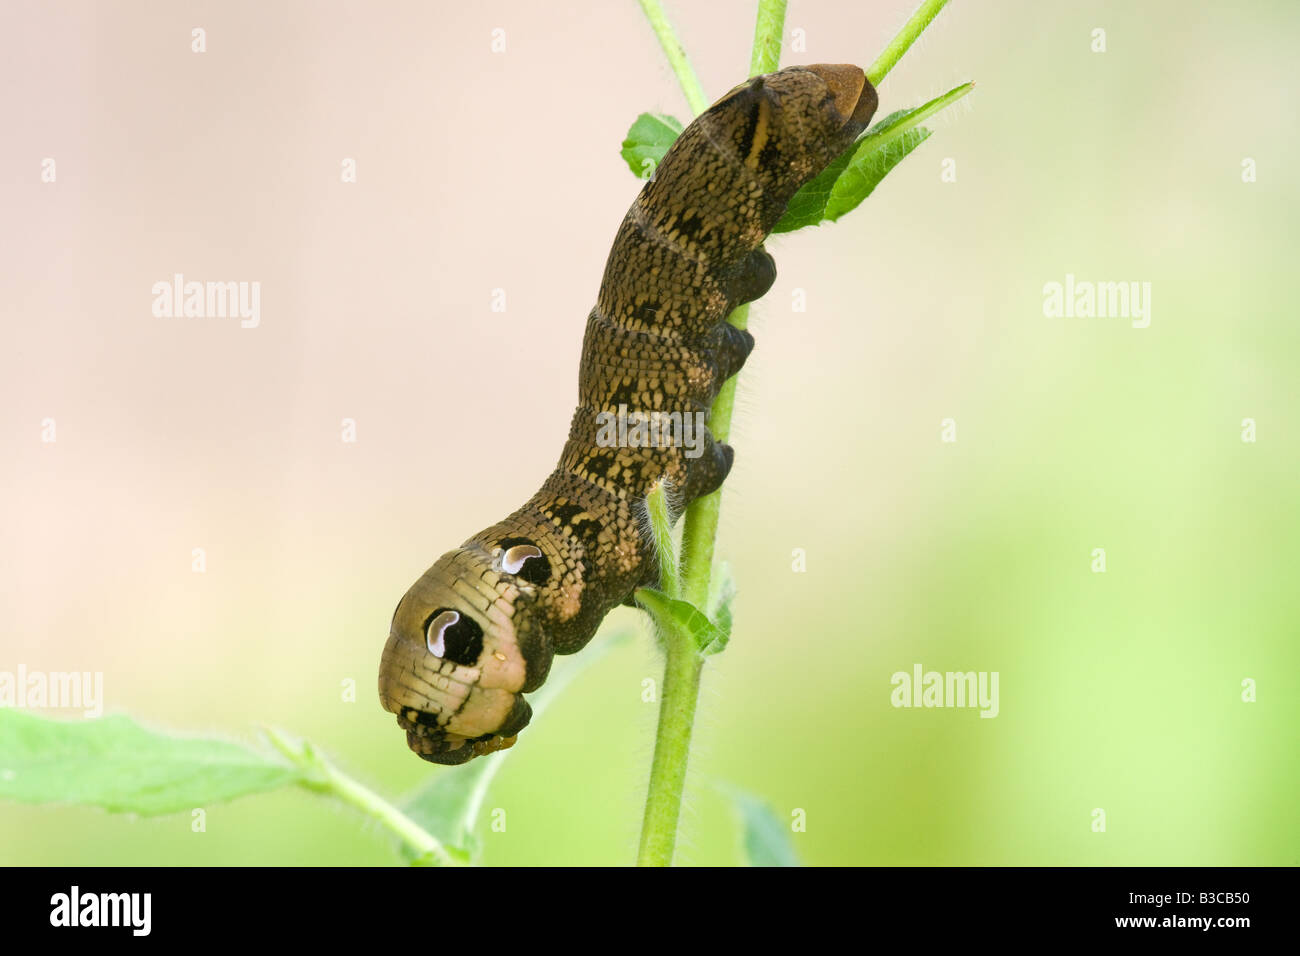 Elephant Hawk Moth Deilephila elpenor caterpillar feeding on Great Willowherb Epilobium hirsutum Stock Photo